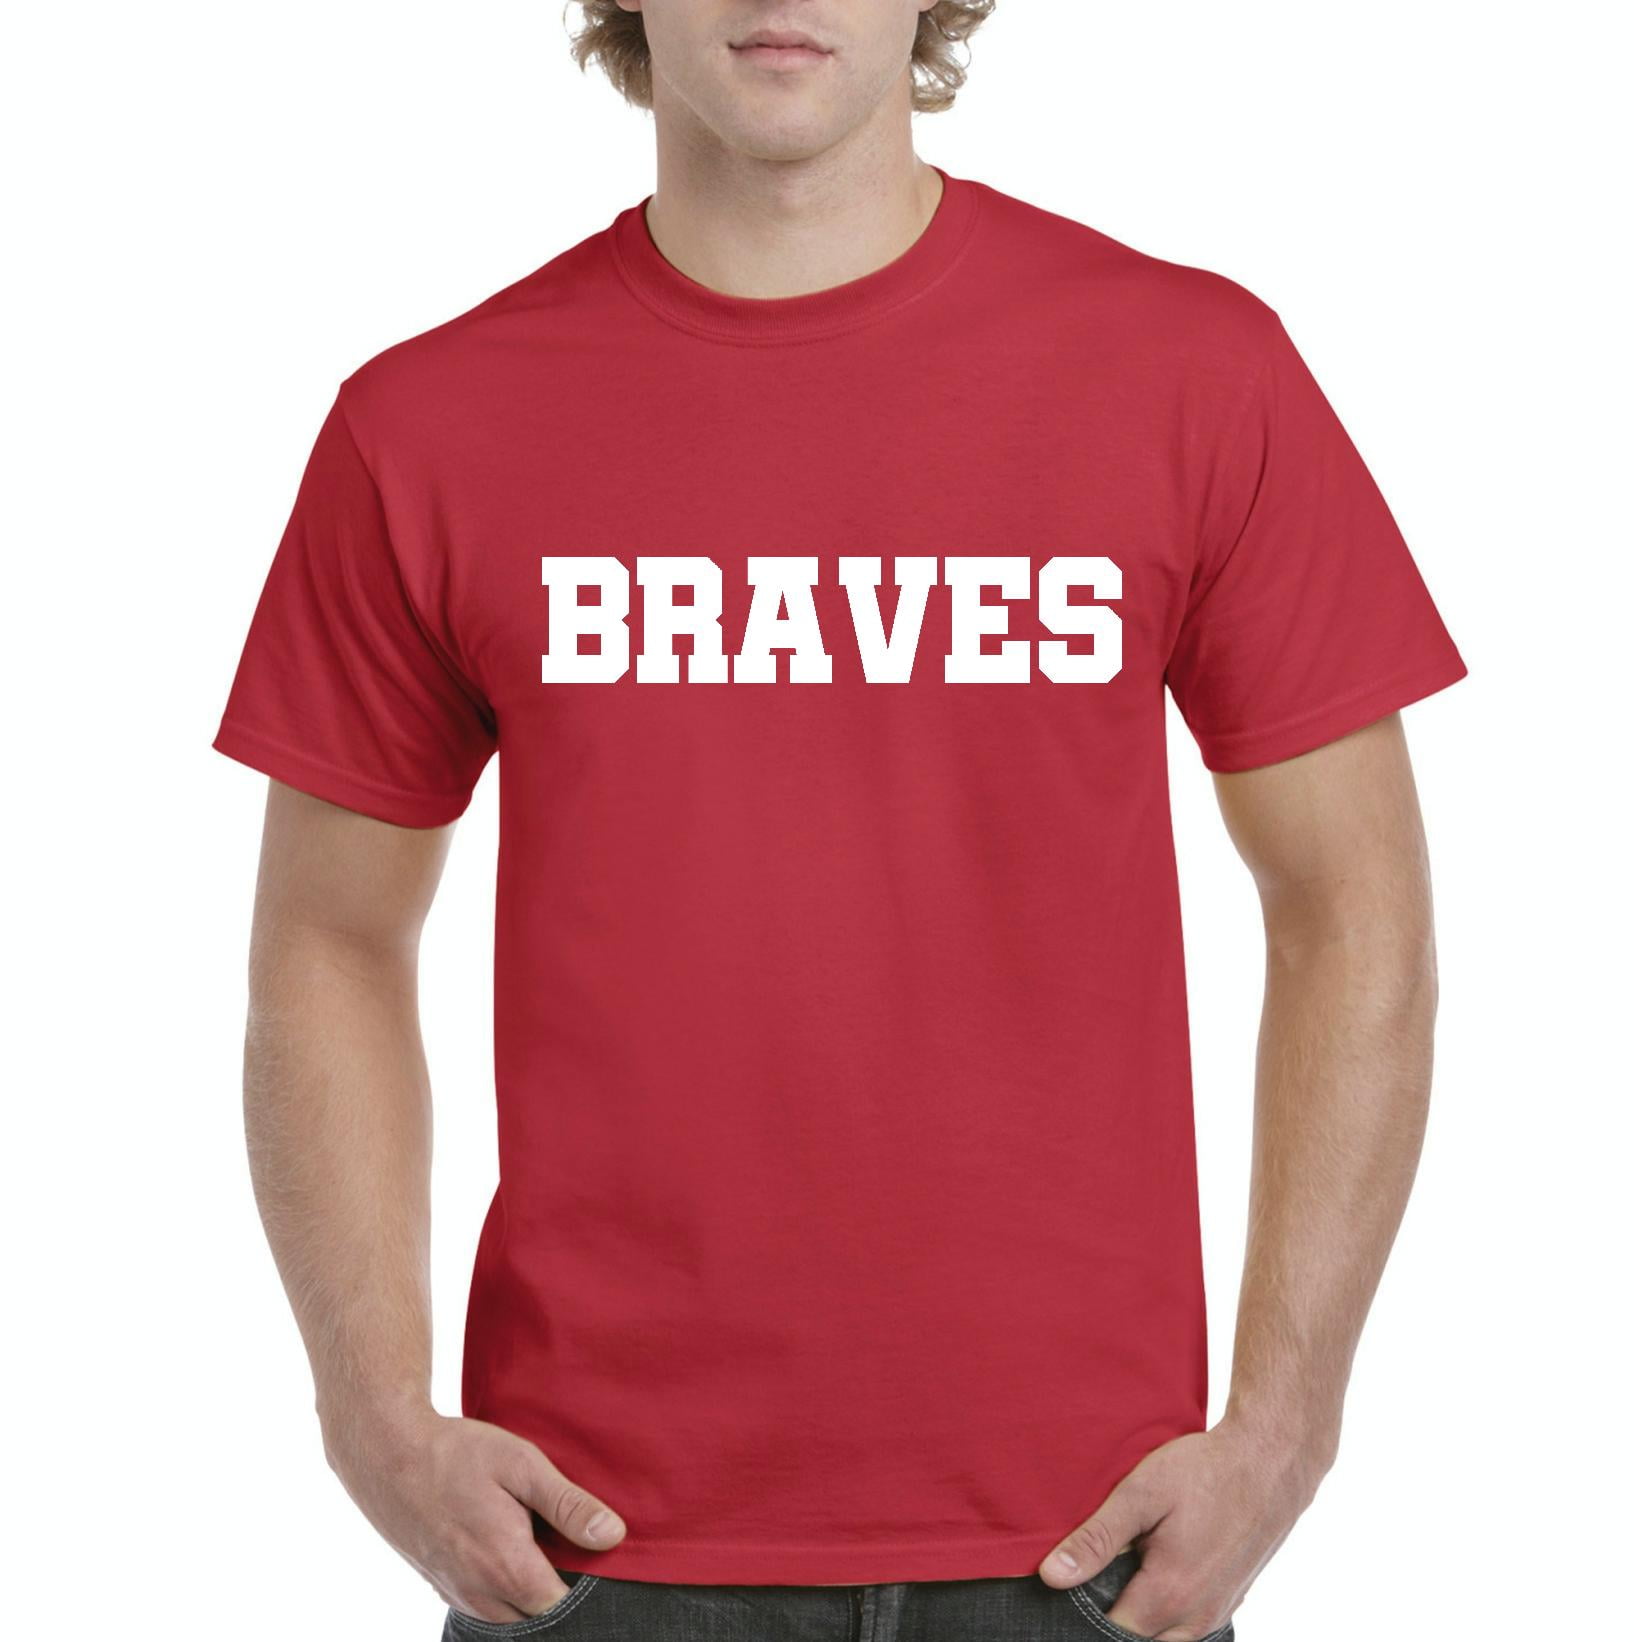 Iwpf - Men's T-Shirt Short Sleeve - Braves, Size: Large, Red